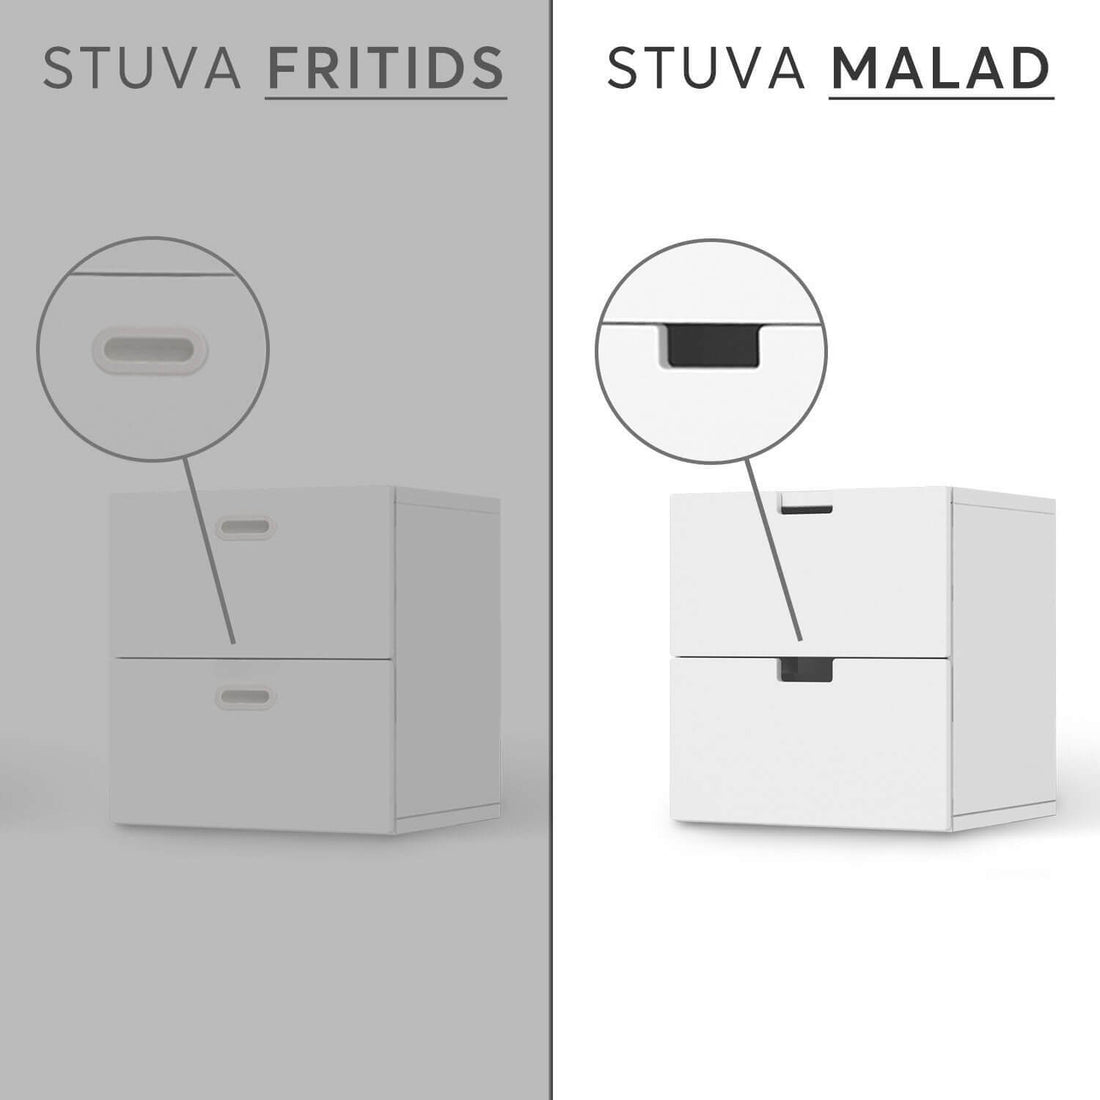 Vergleich IKEA Stuva Malad / Fritids - Elephants